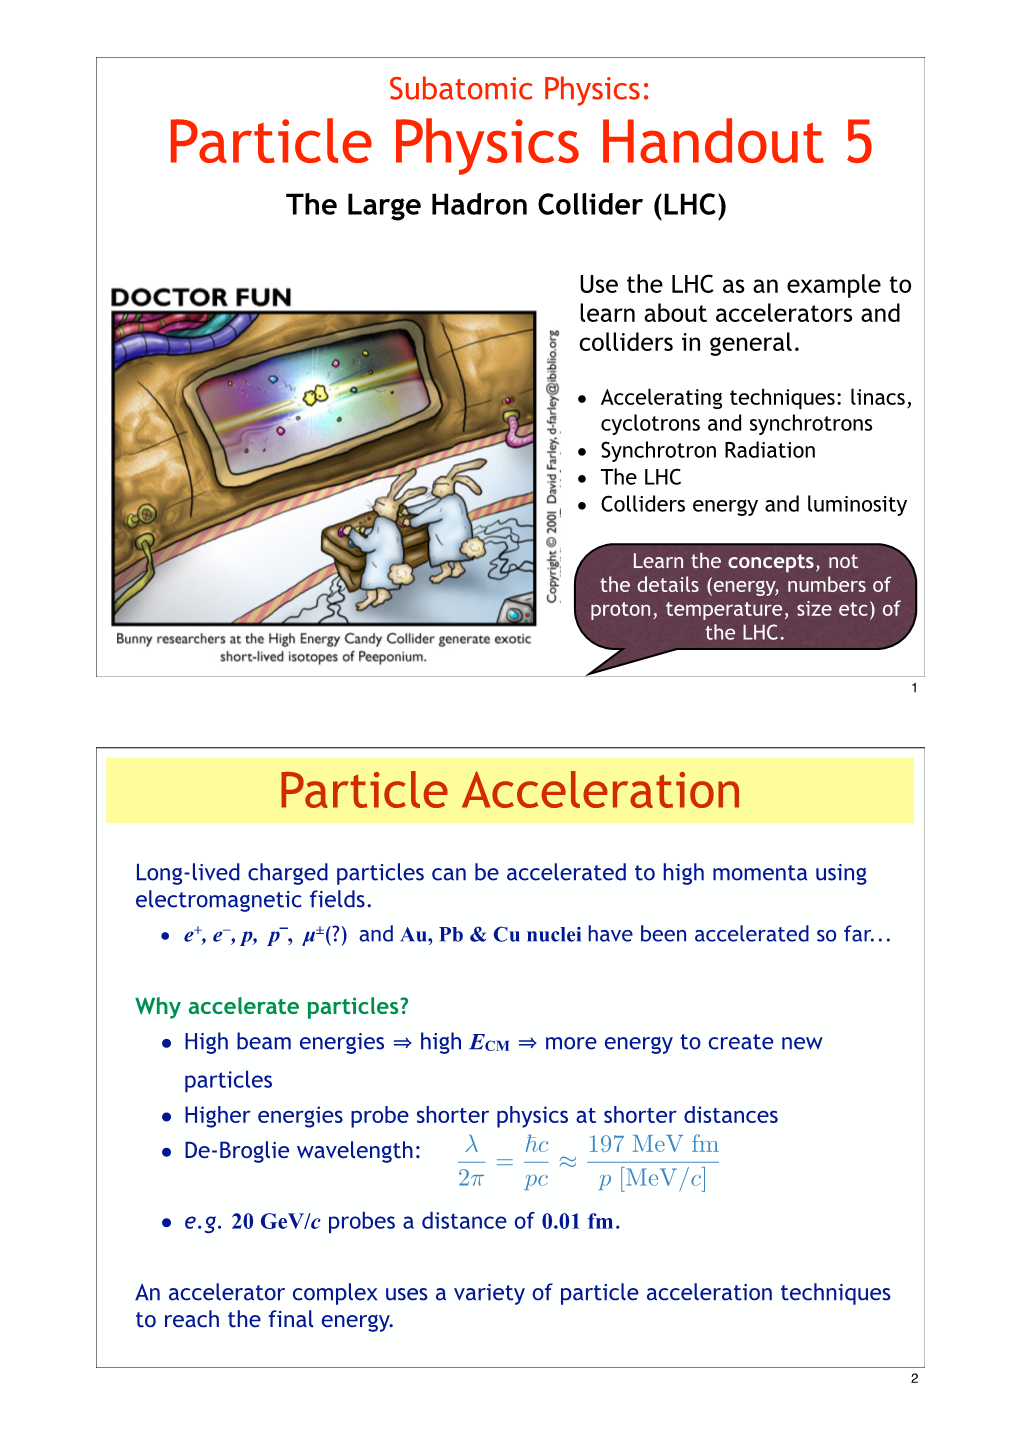 Particle Physics Handout 5 the Large Hadron Collider (LHC)